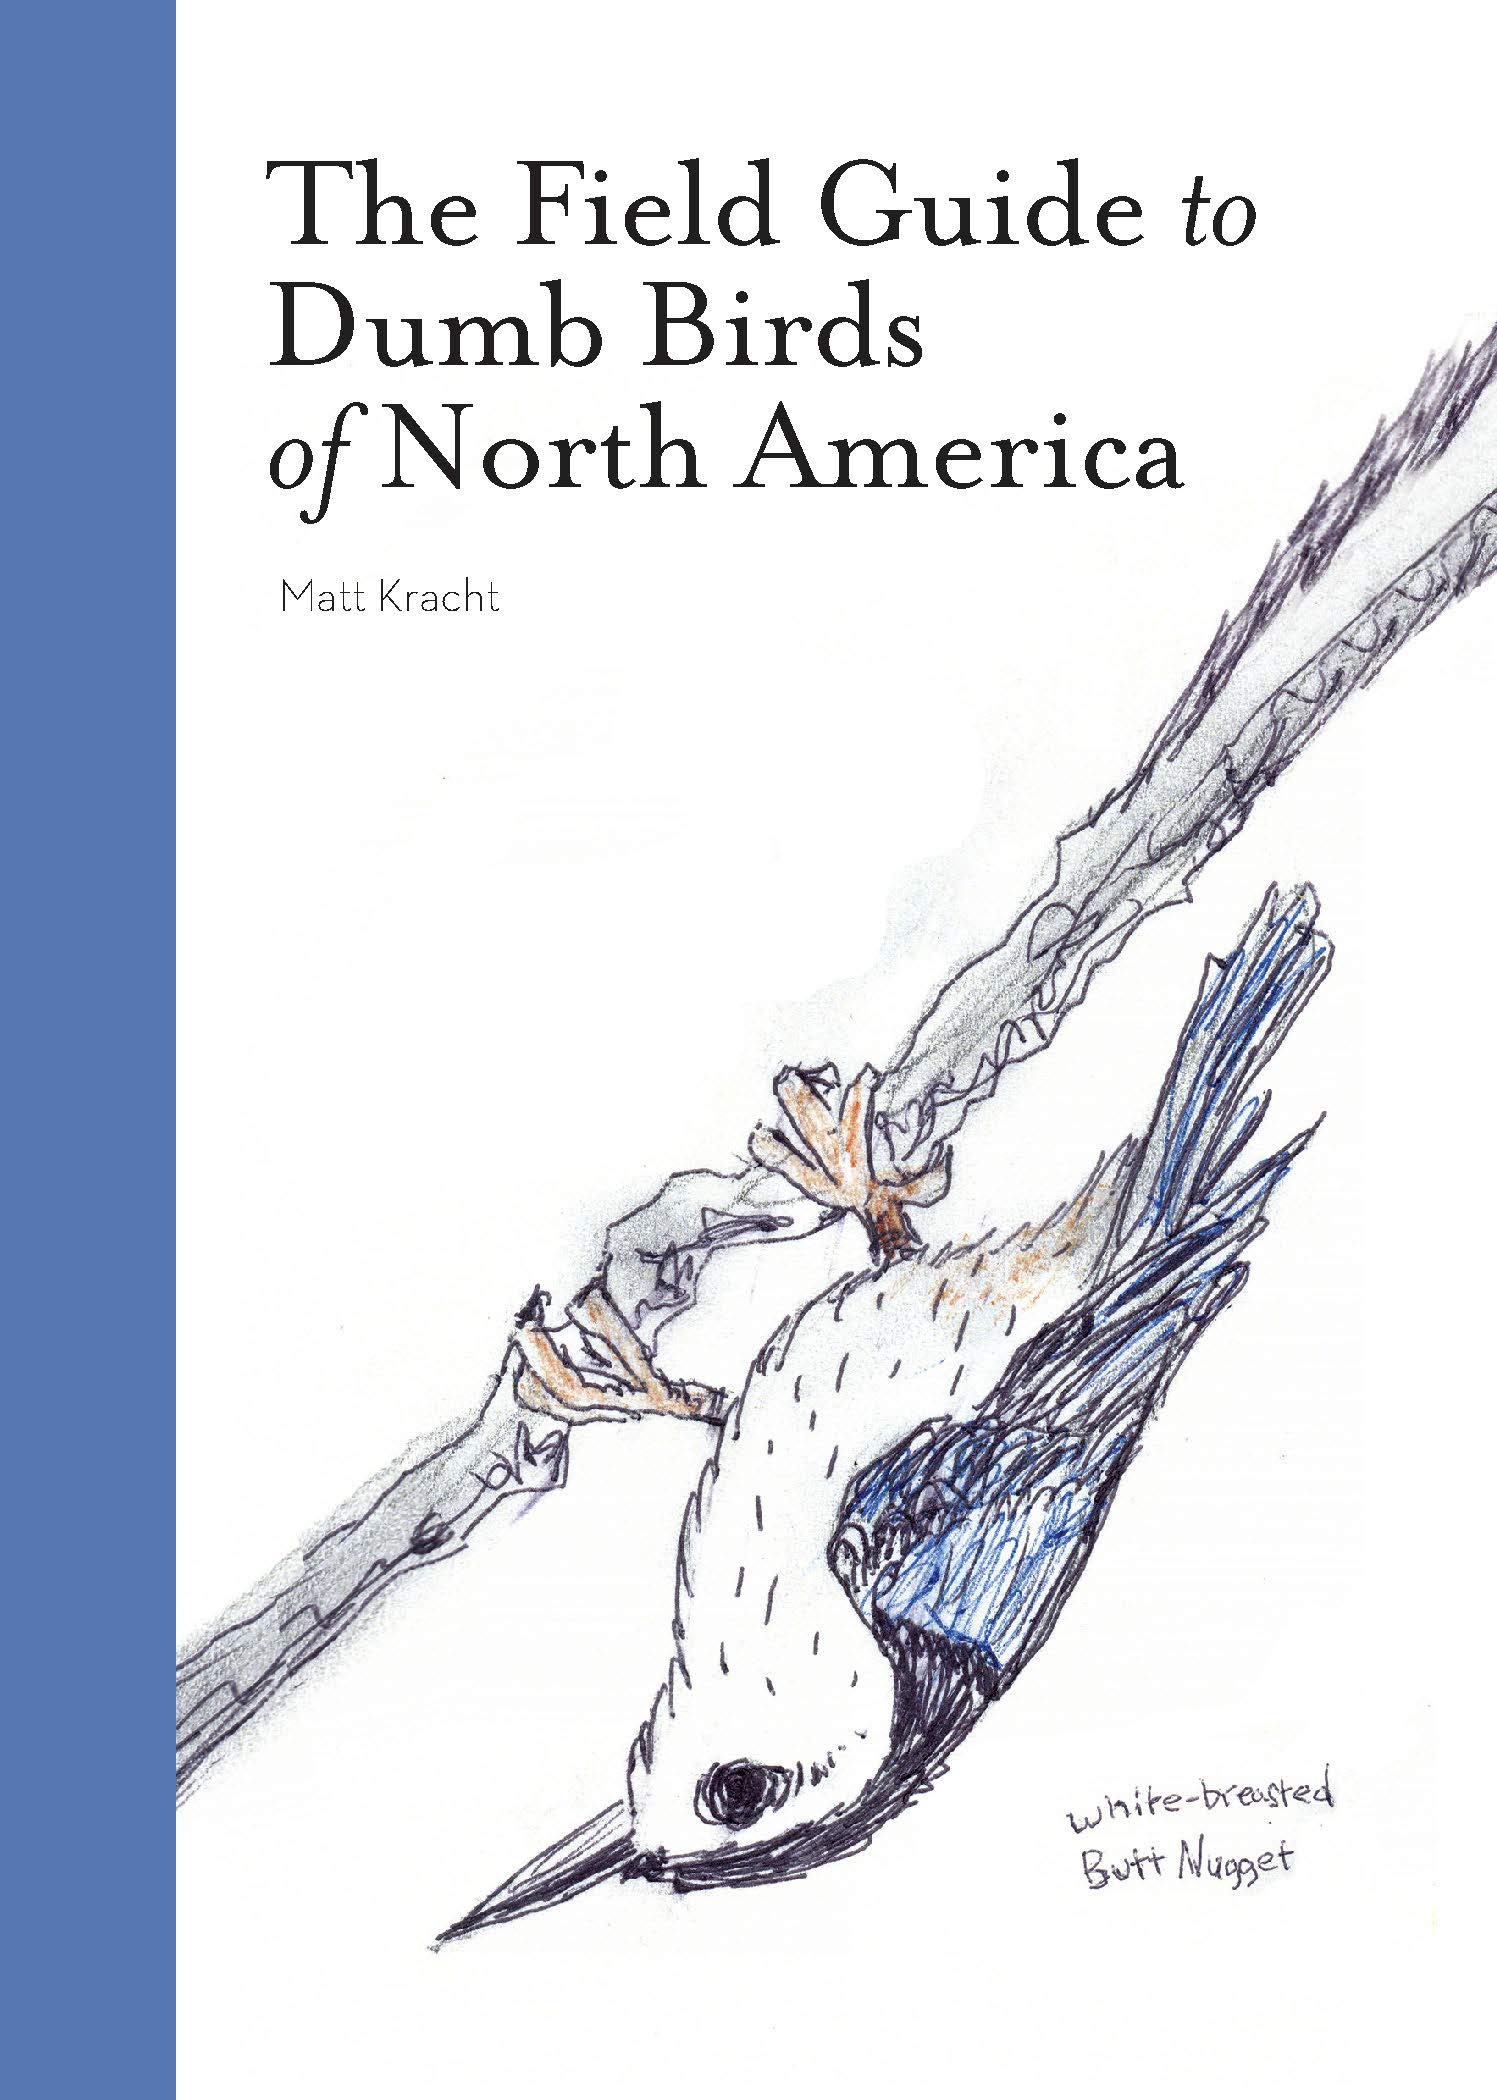 The Field Guide to Dumb Birds of North America (eBook) by Matt Kracht $1.99